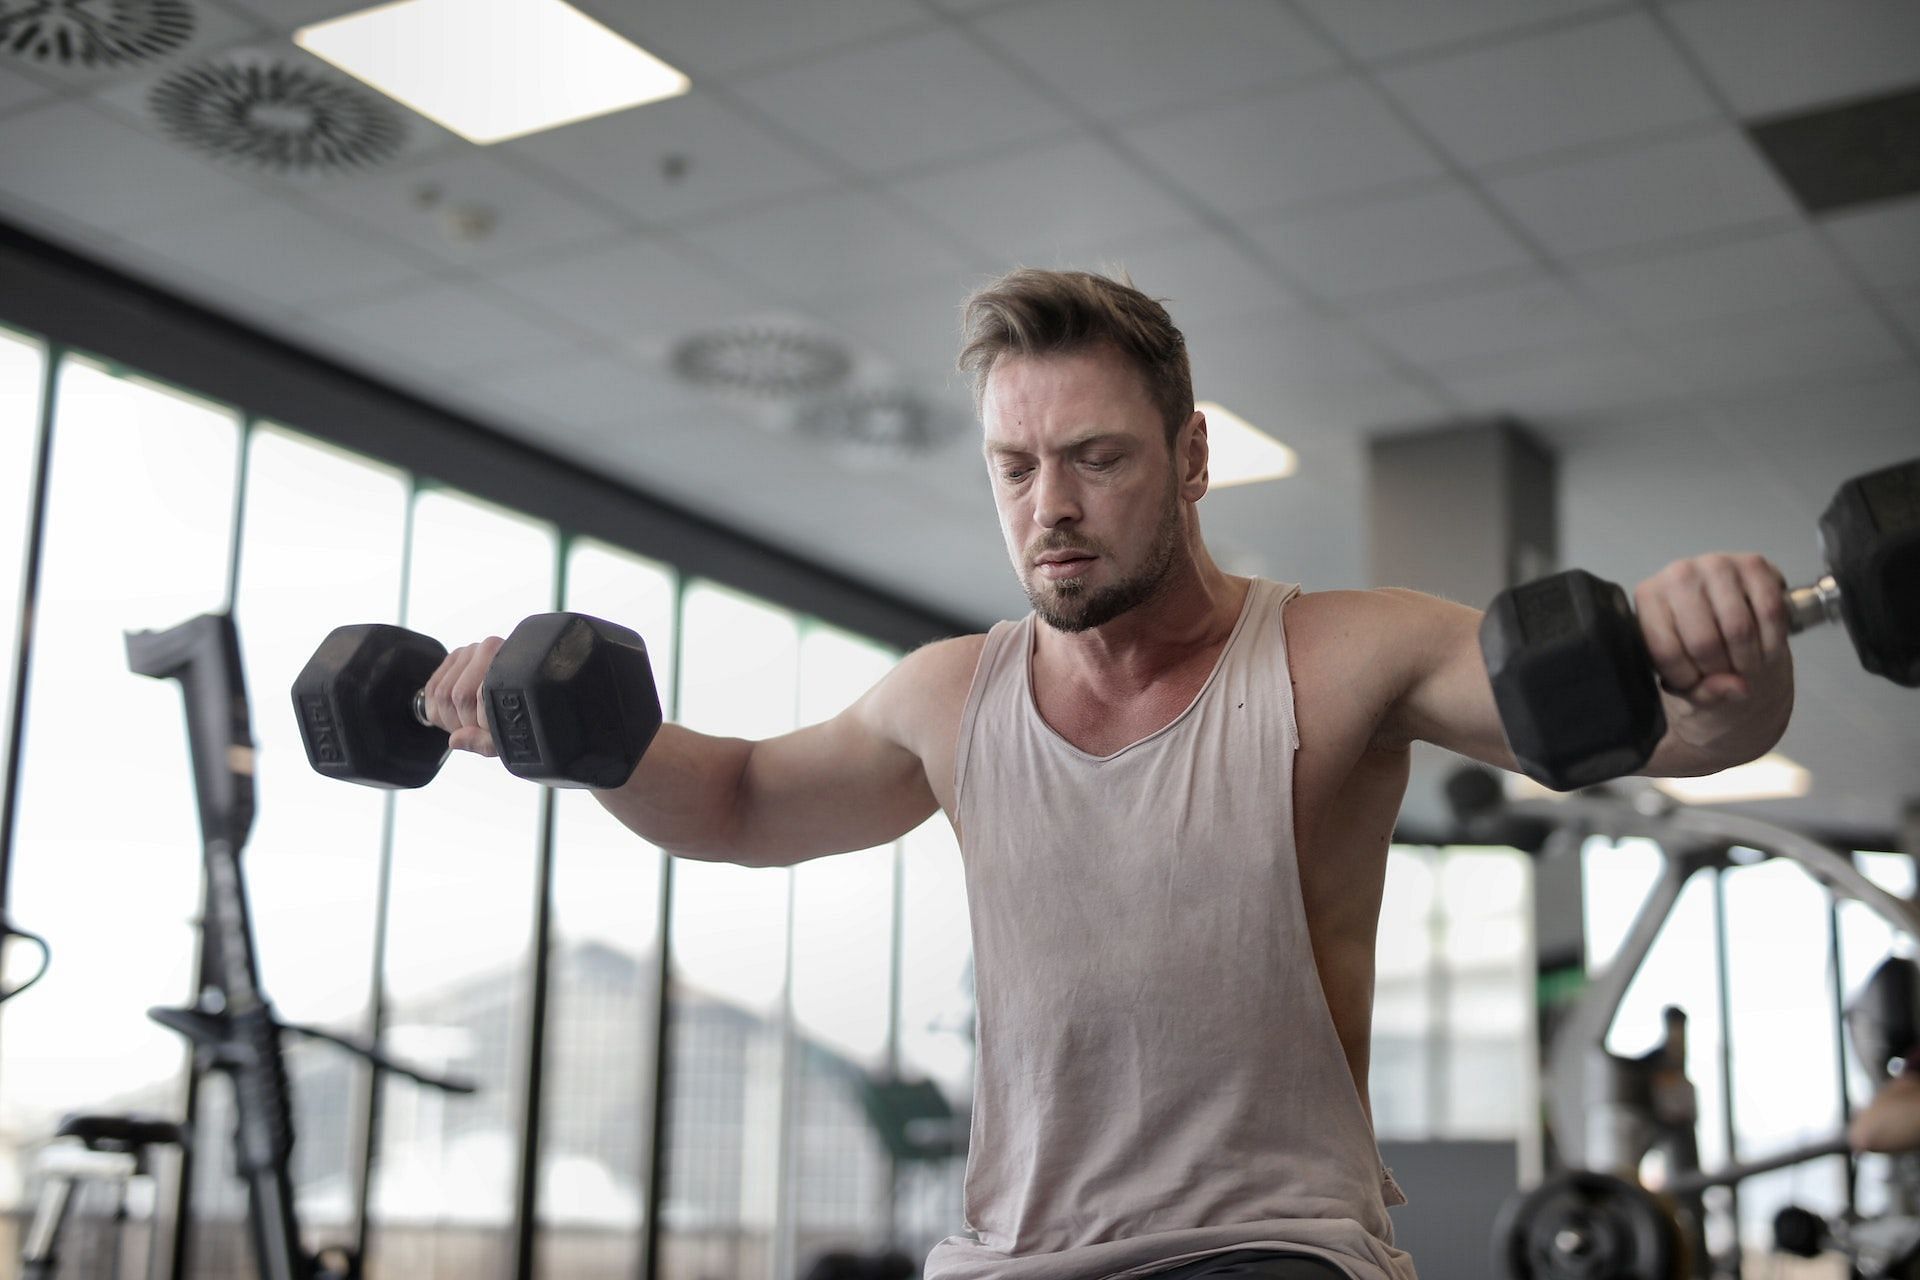 Shoulder exercises boost shoulder mobility and strength. (Photo via Pexels/Andrea Piacquadio)